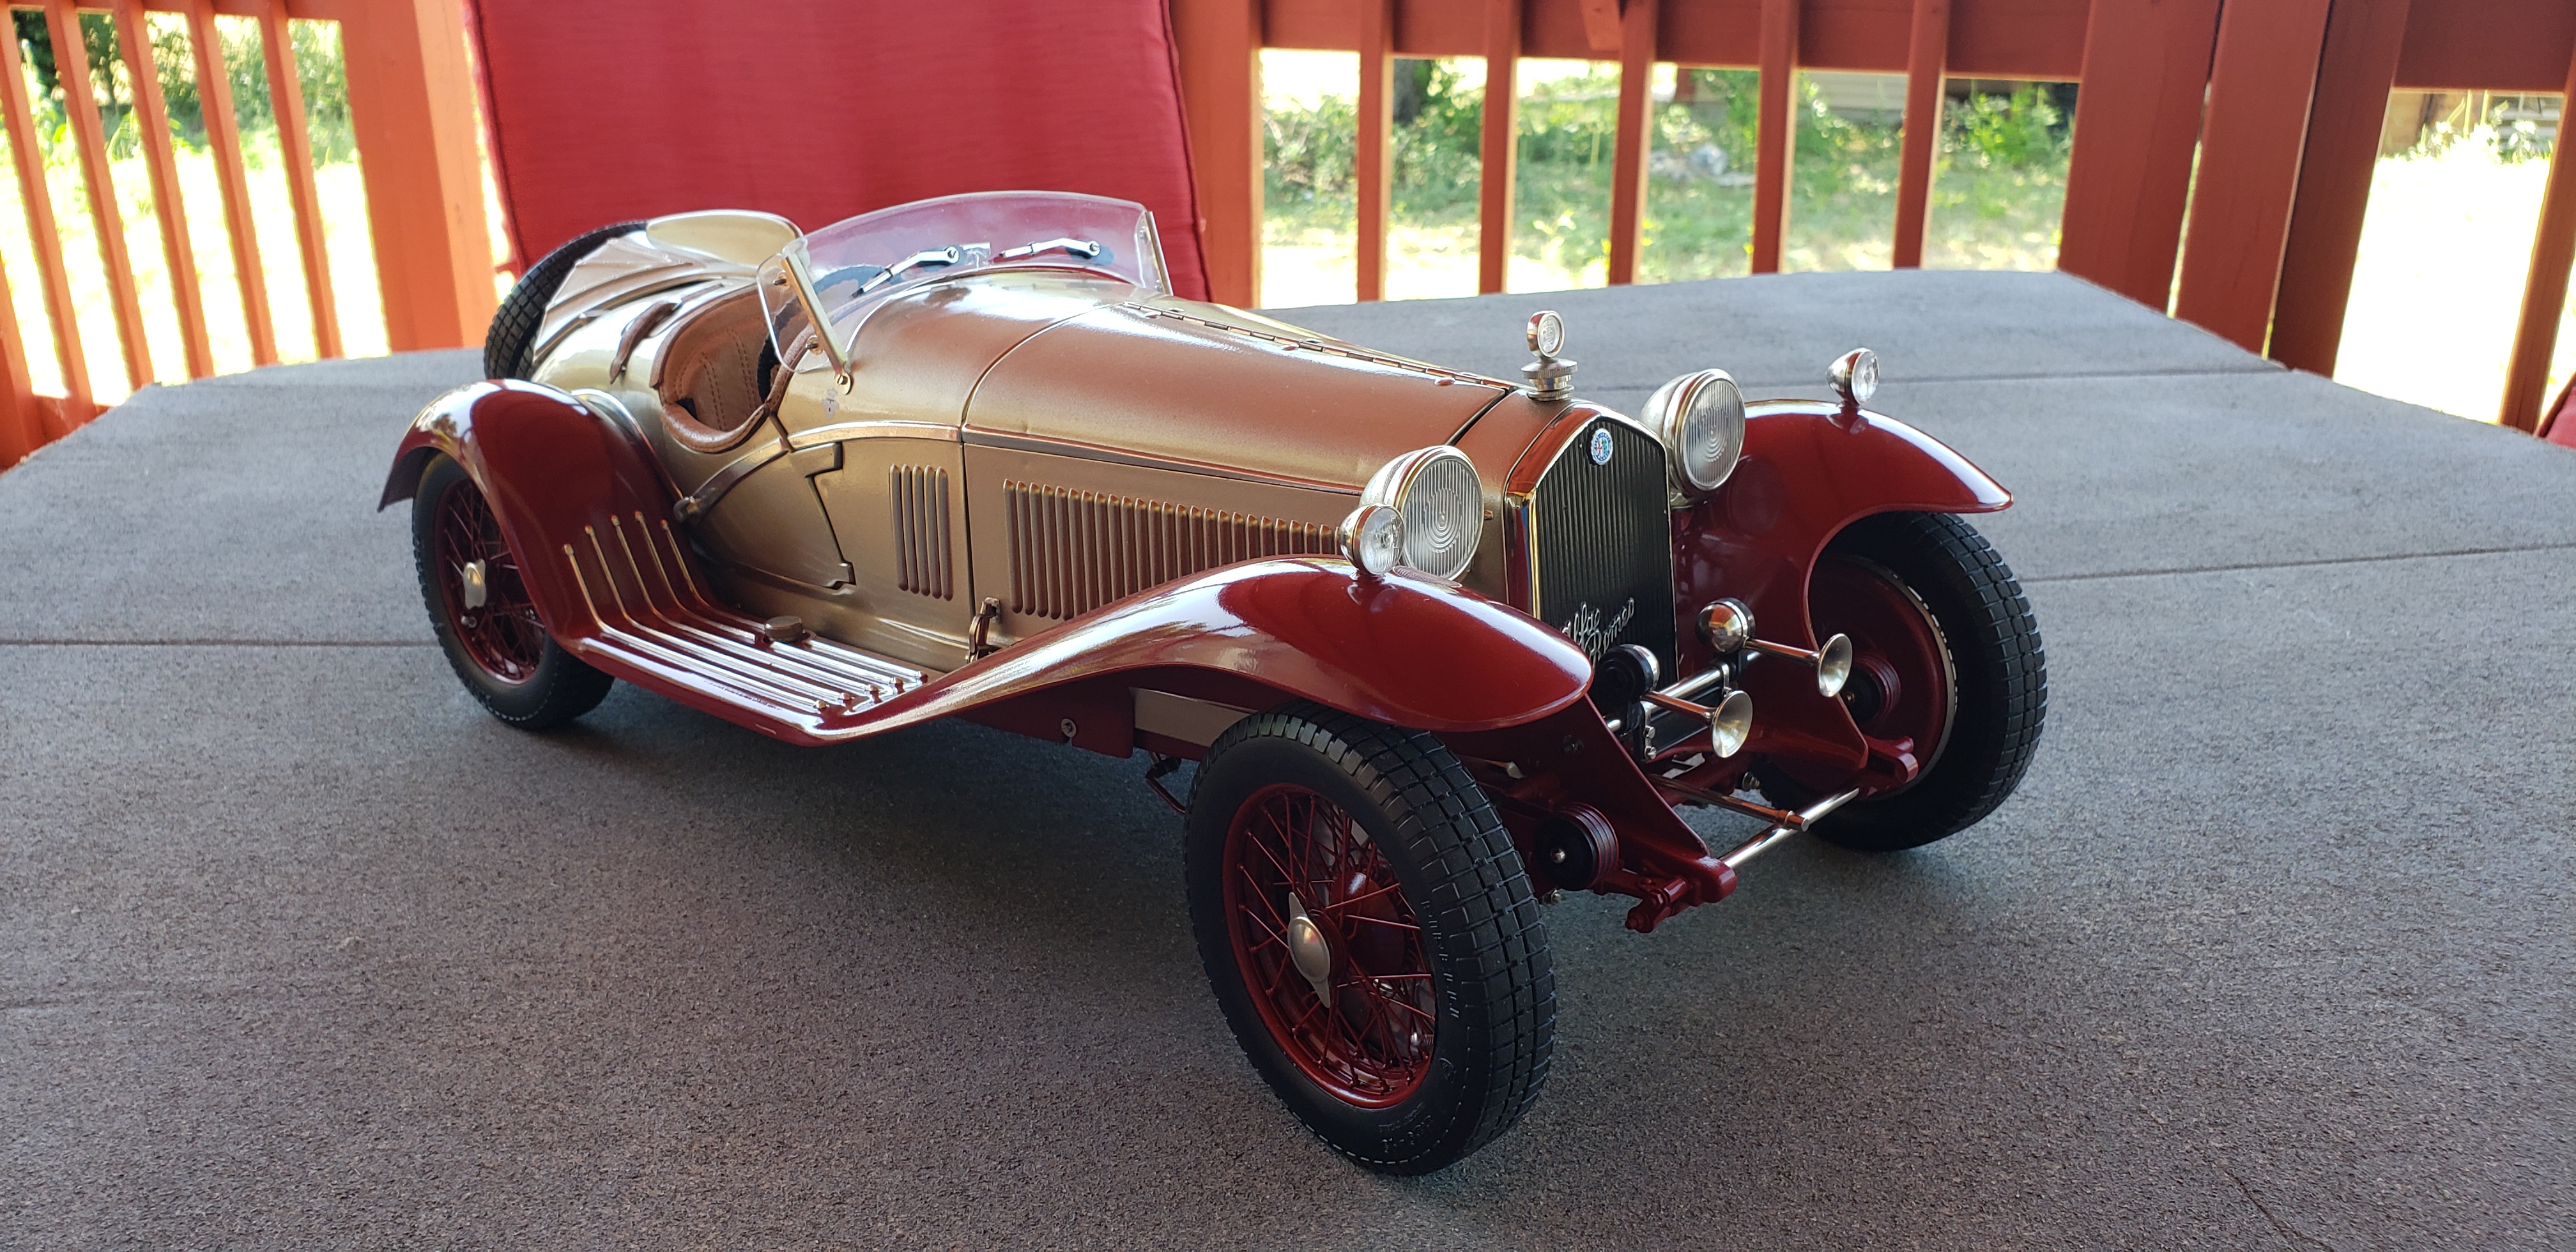 Pocher 1932 Alfa Romeo Spider - Model Cars - Model Cars Magazine Forum